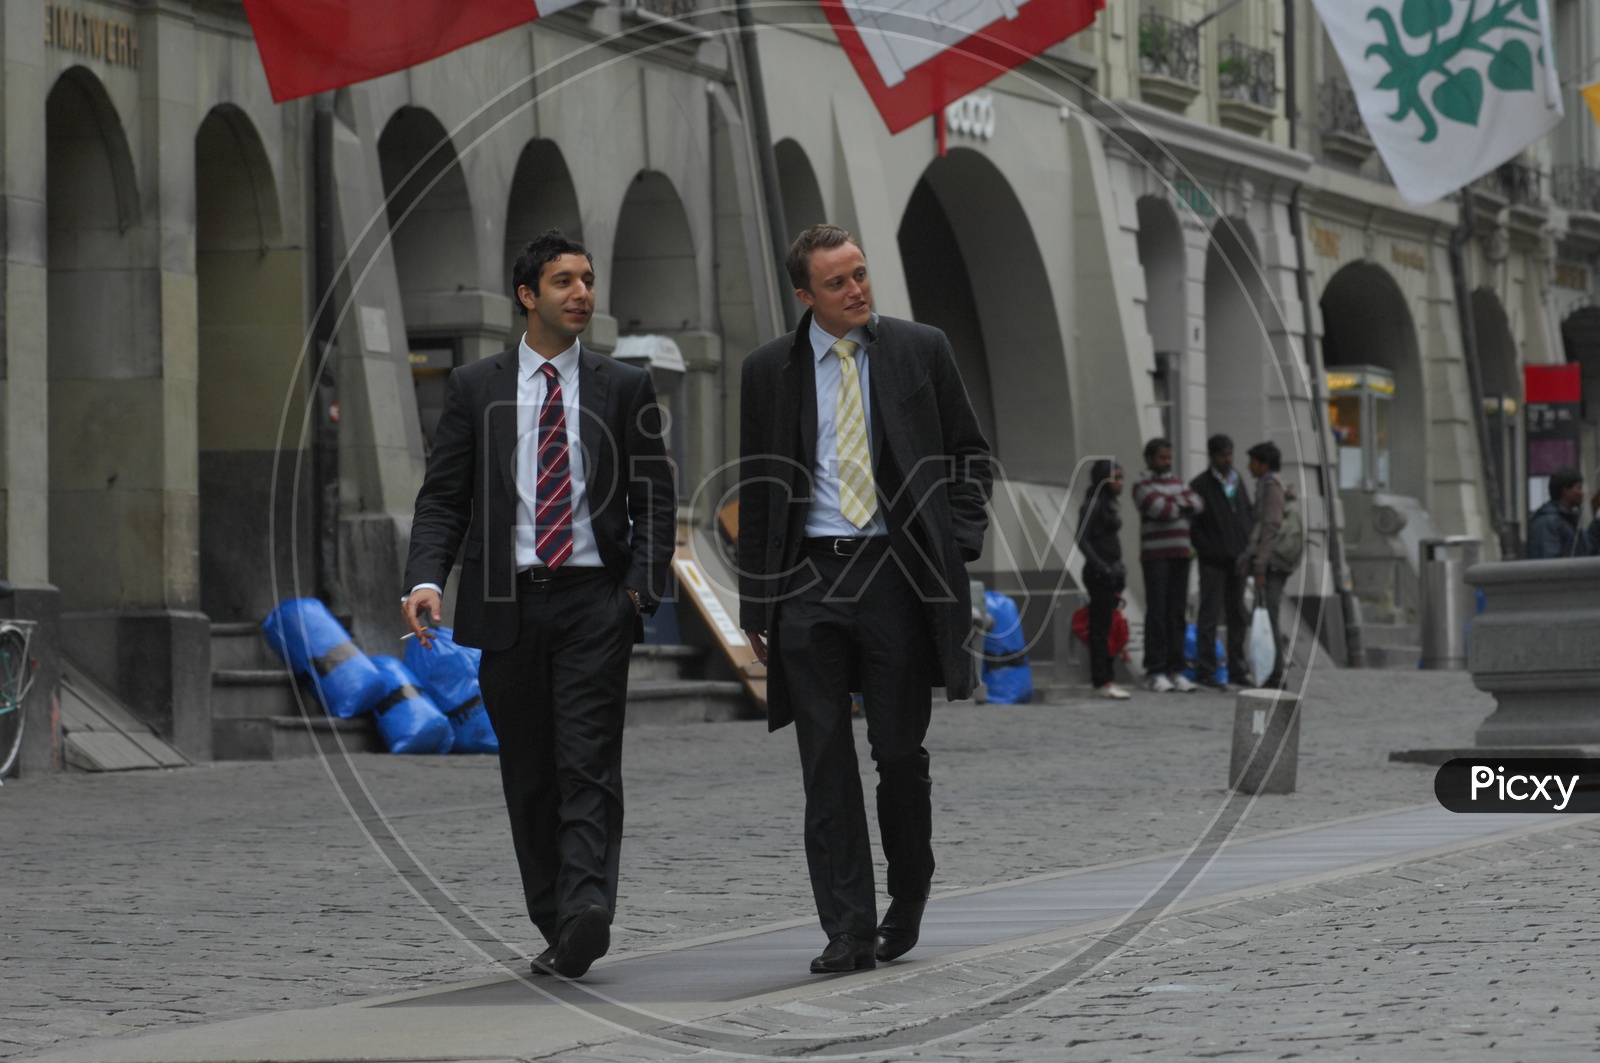 Two Young men walking wearing suits